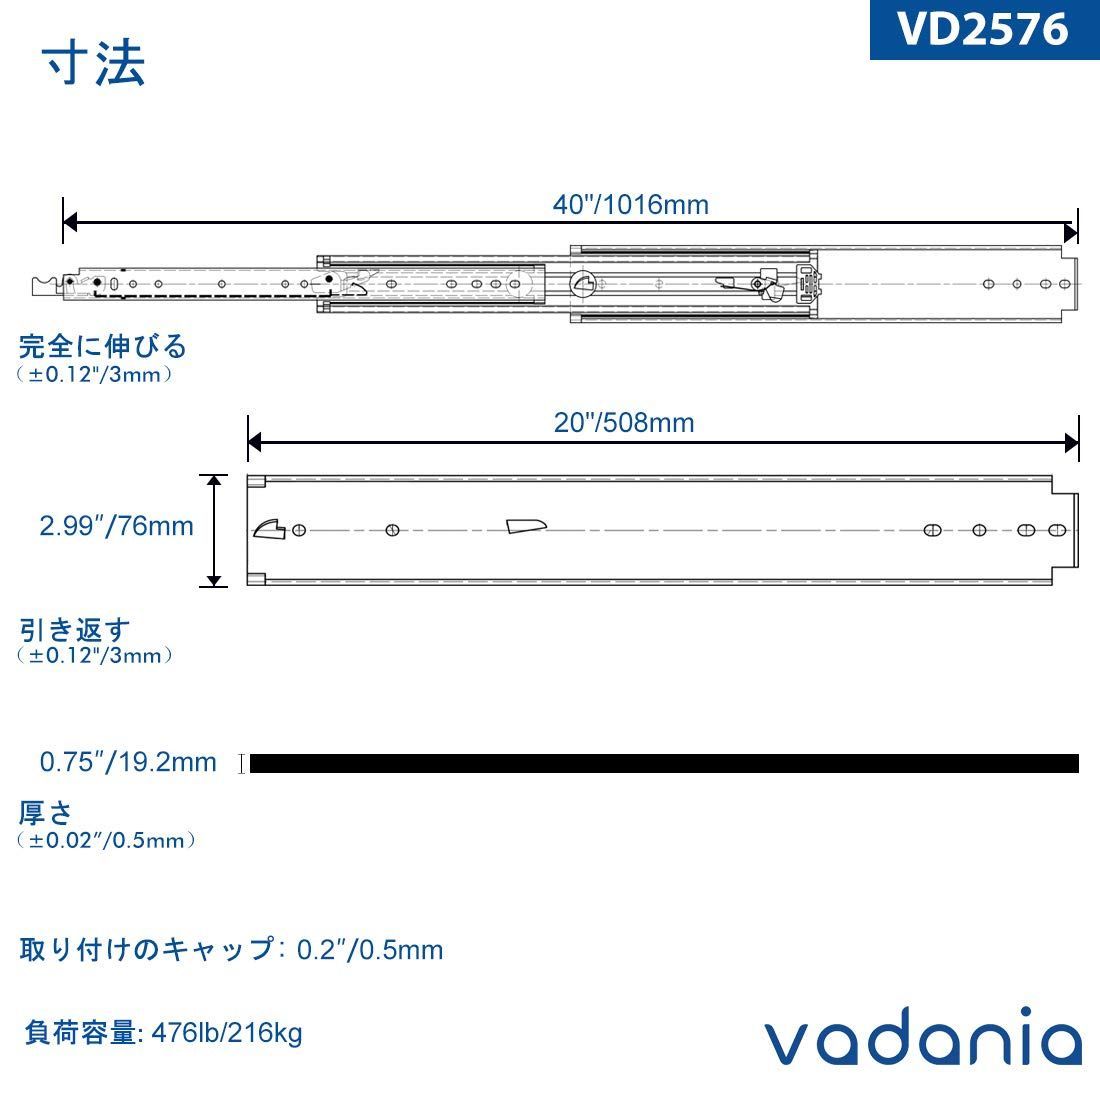 VADANIA 超重量用スライドレール ロック付き 1200mm Heavy Duty引き出しスライド VD2576 工業用 左右1セット - 5